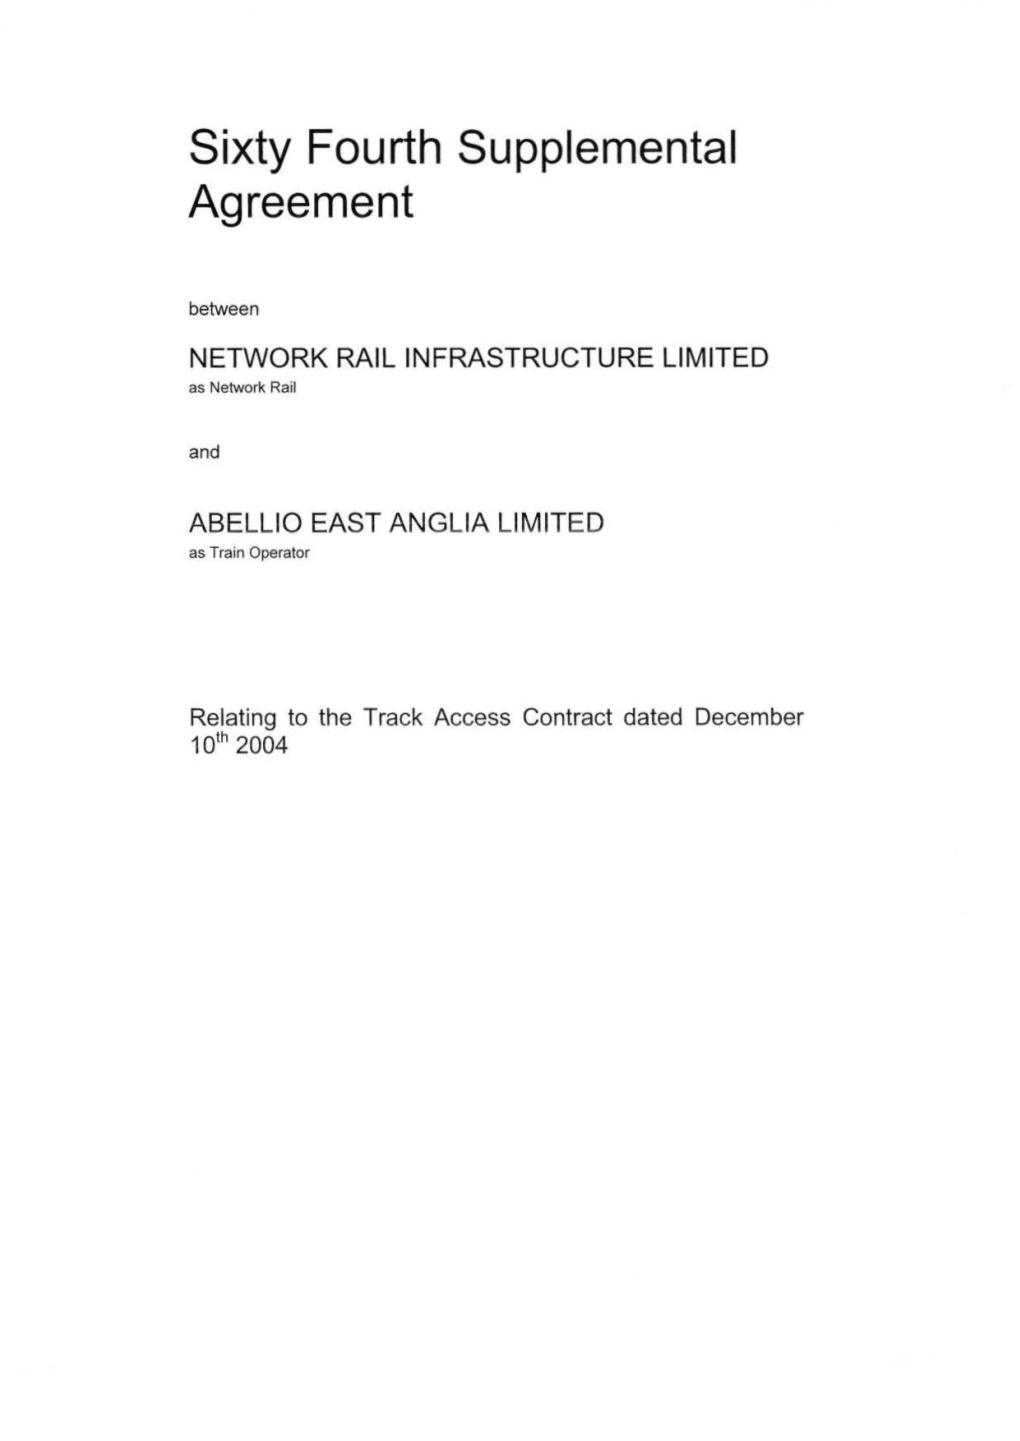 Abellio East Anglia 64Th SA Signed Agreement